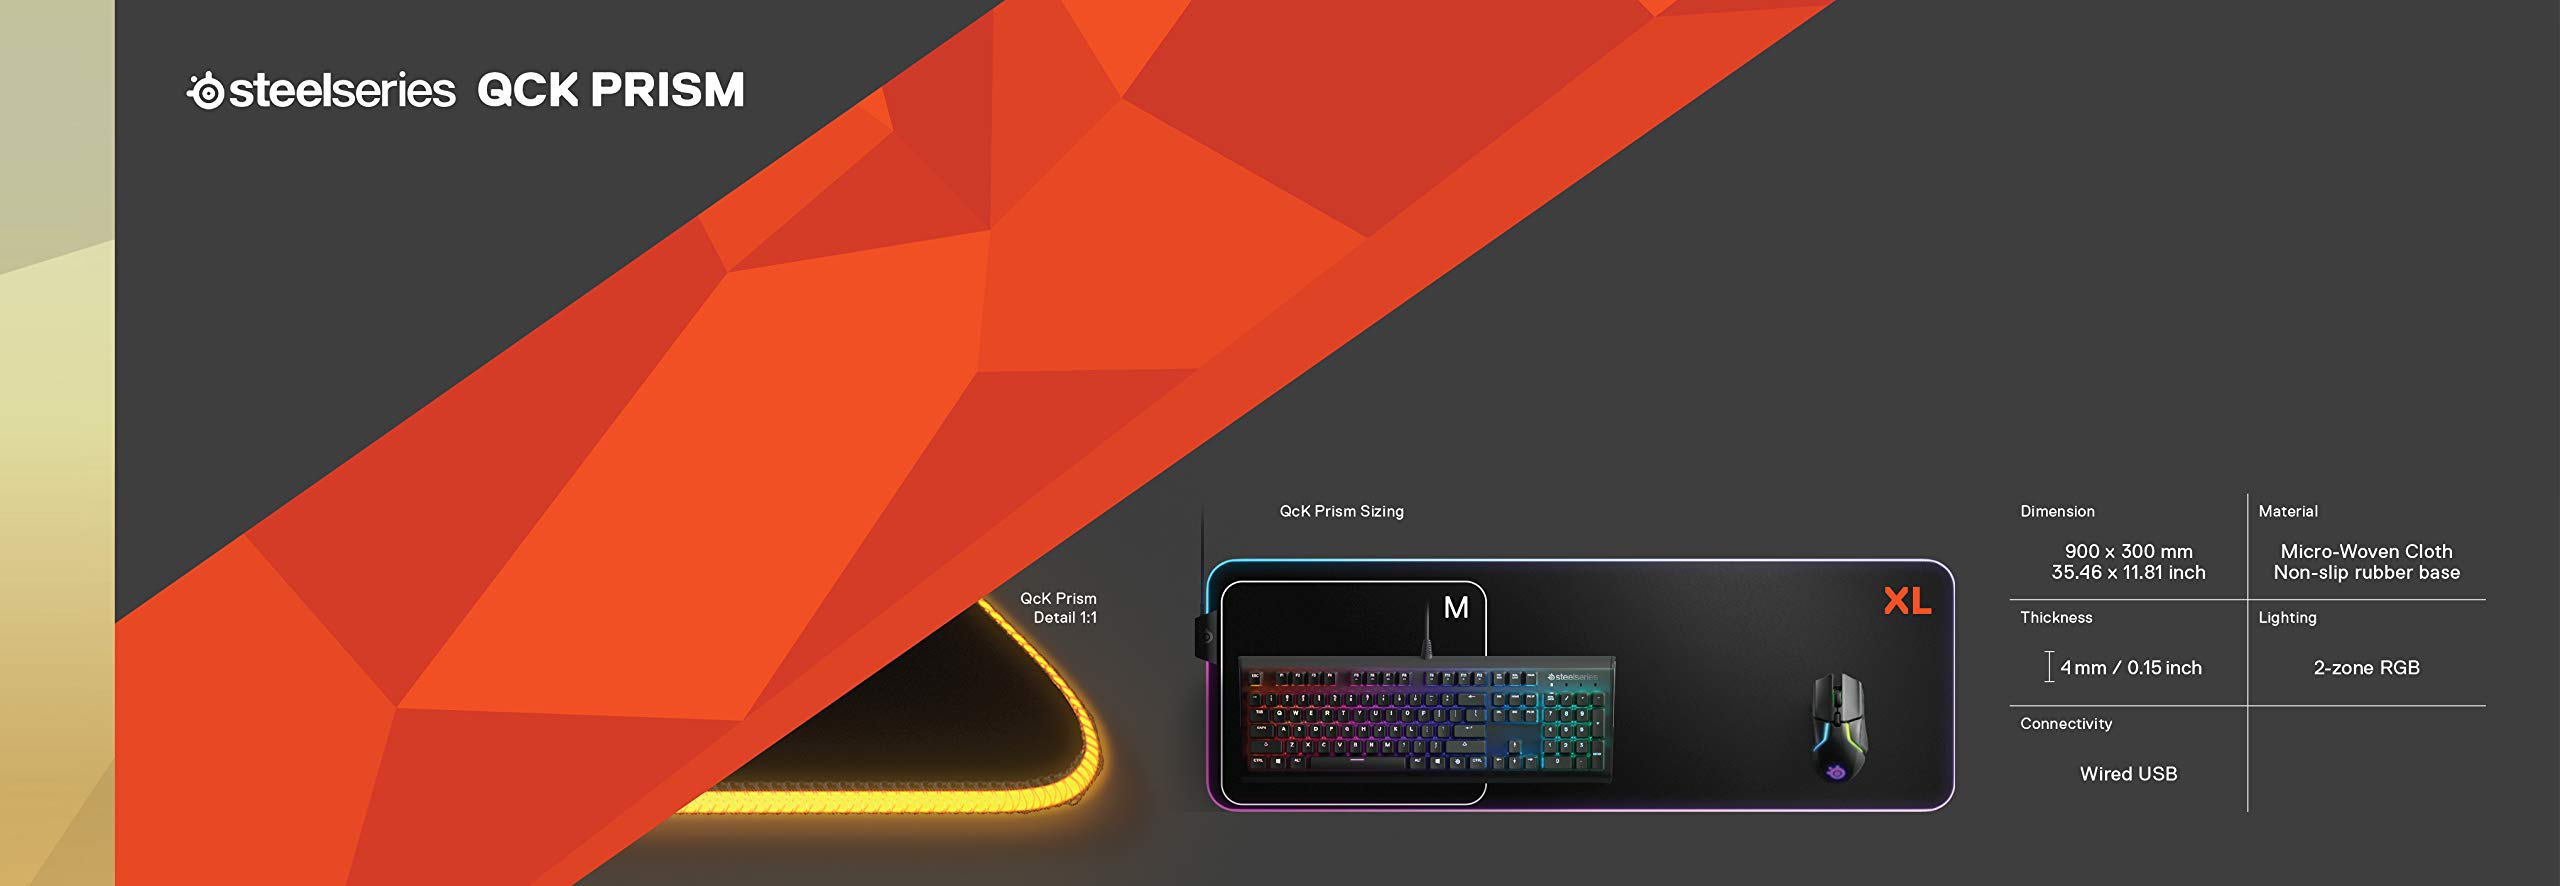 SteelSeries QcK Prism Cloth XL Gaming Mouse Pad, 2 Zones, RGB Illumination, 3.5 x 11.8 x 0.1 inches (9 x 30 x 0.4 cm), Black